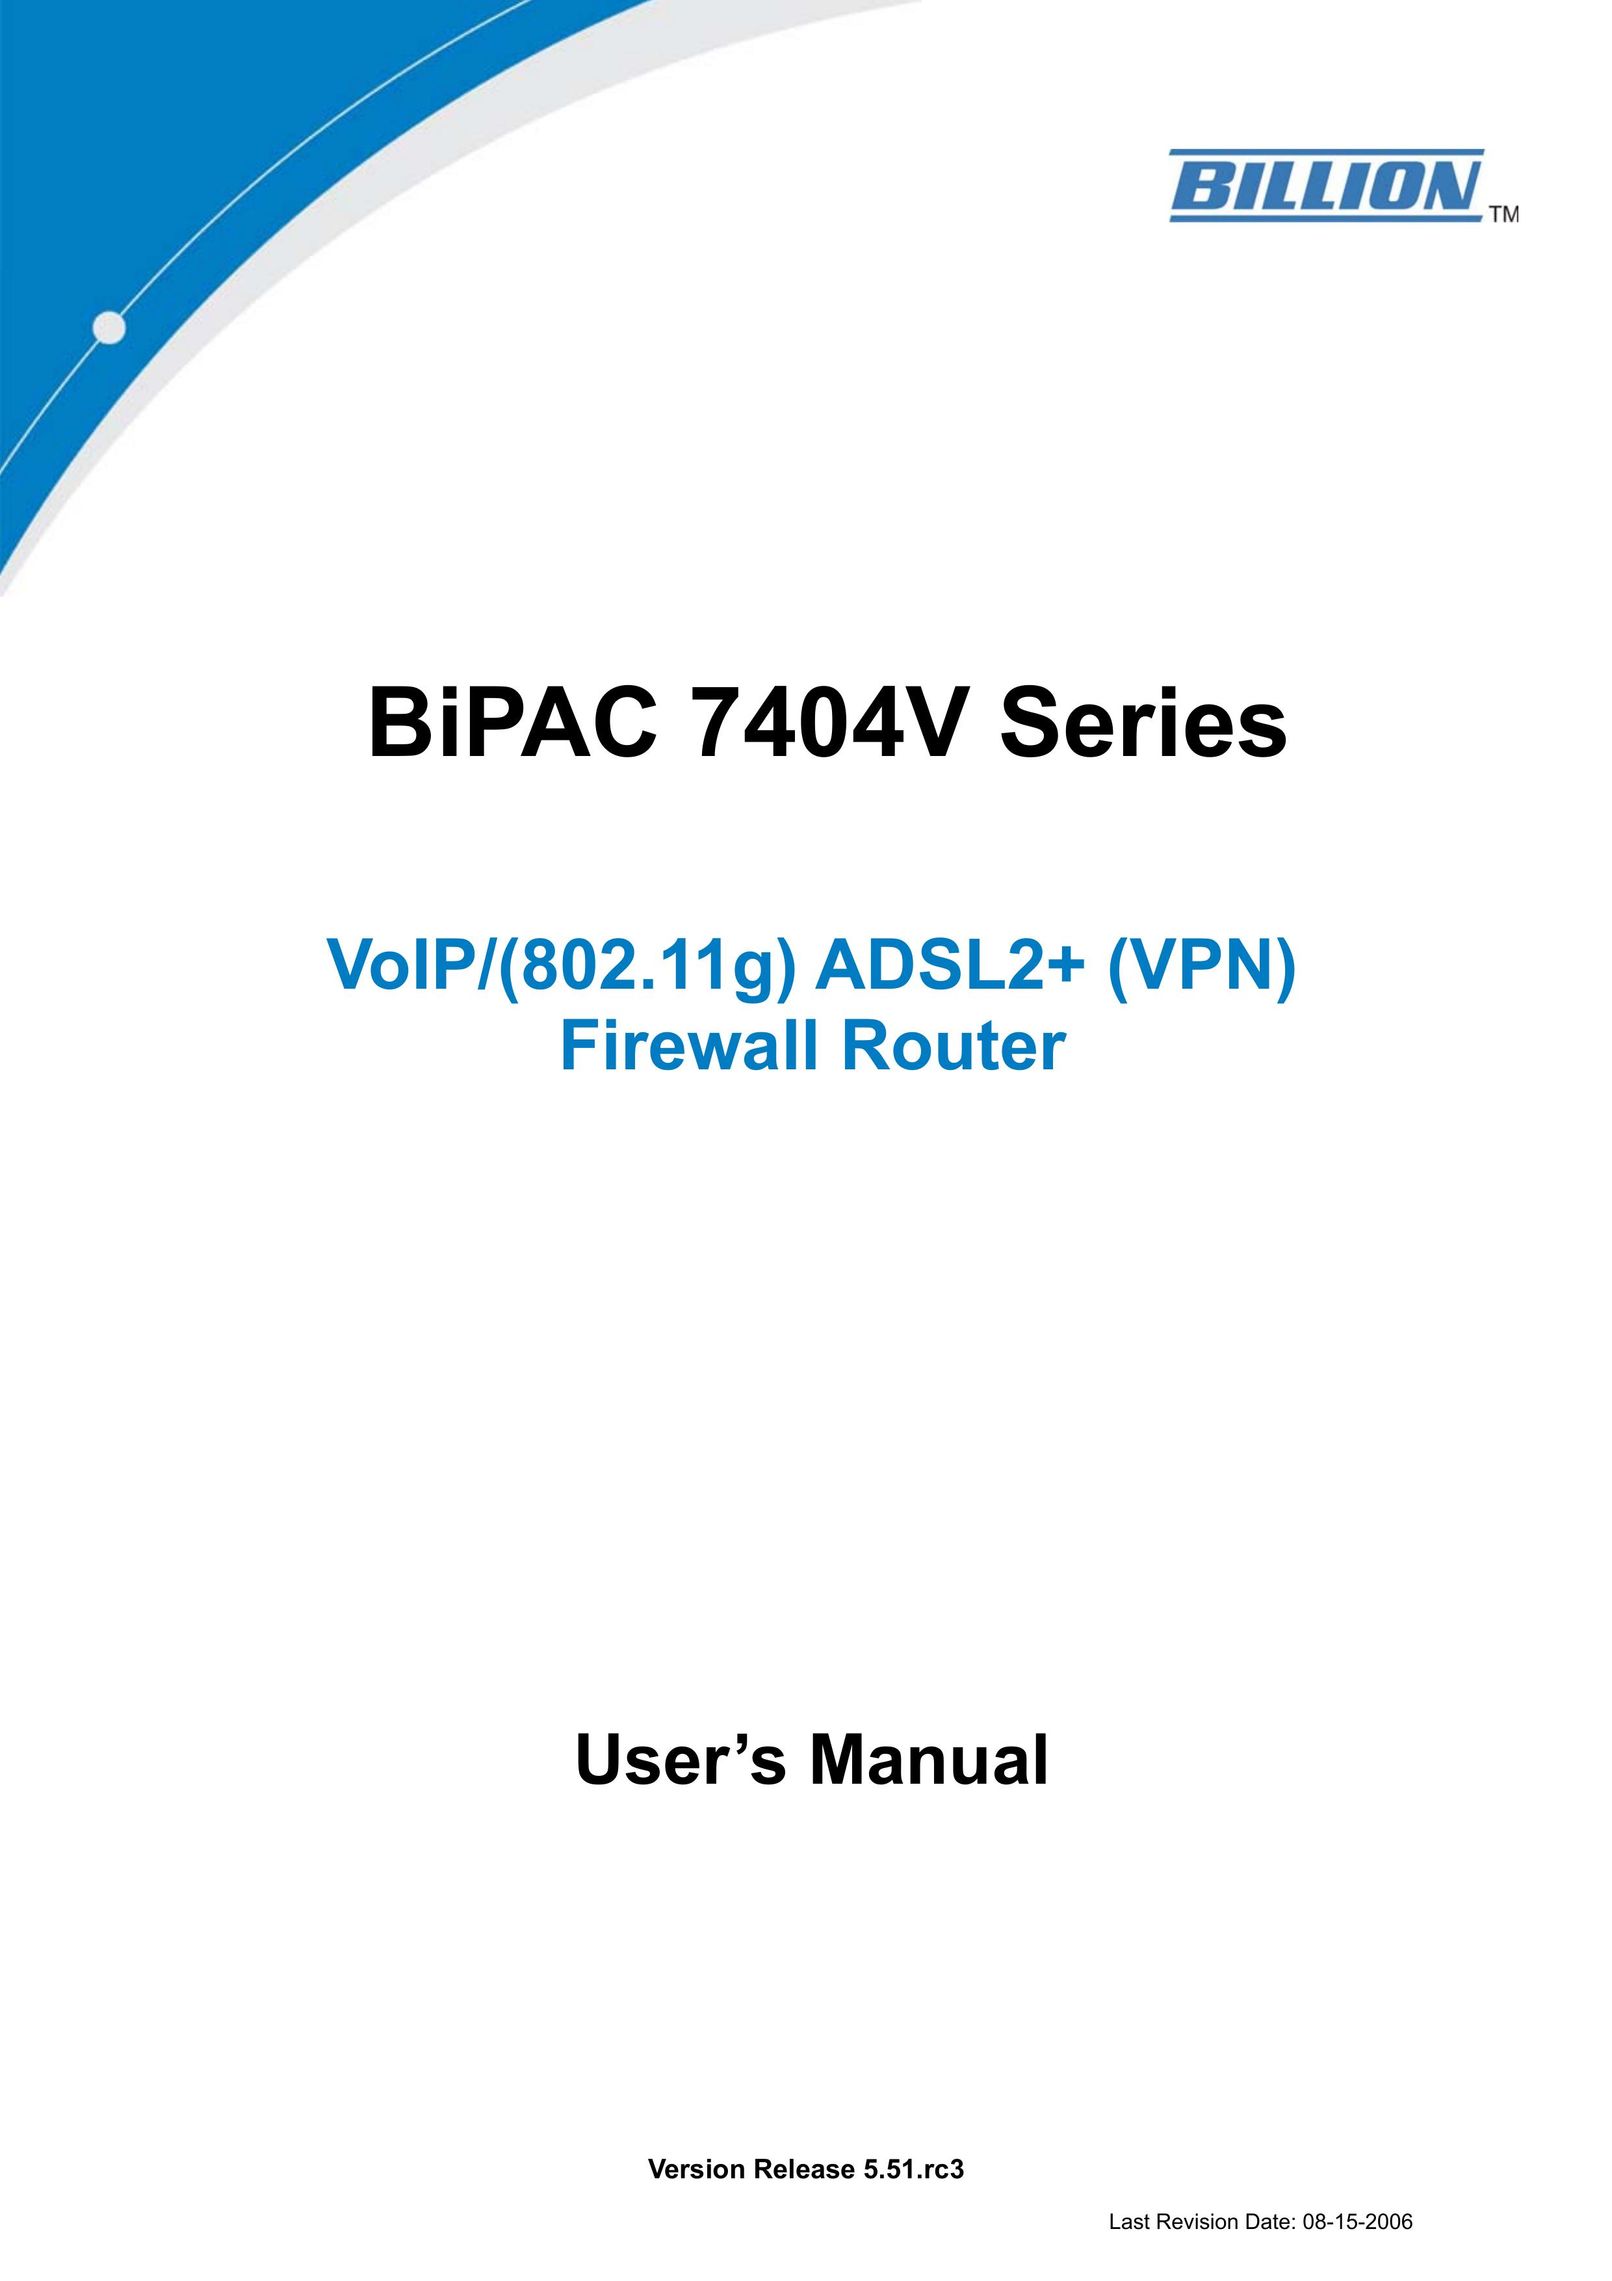 Billion Electric Company 7404V Network Router User Manual